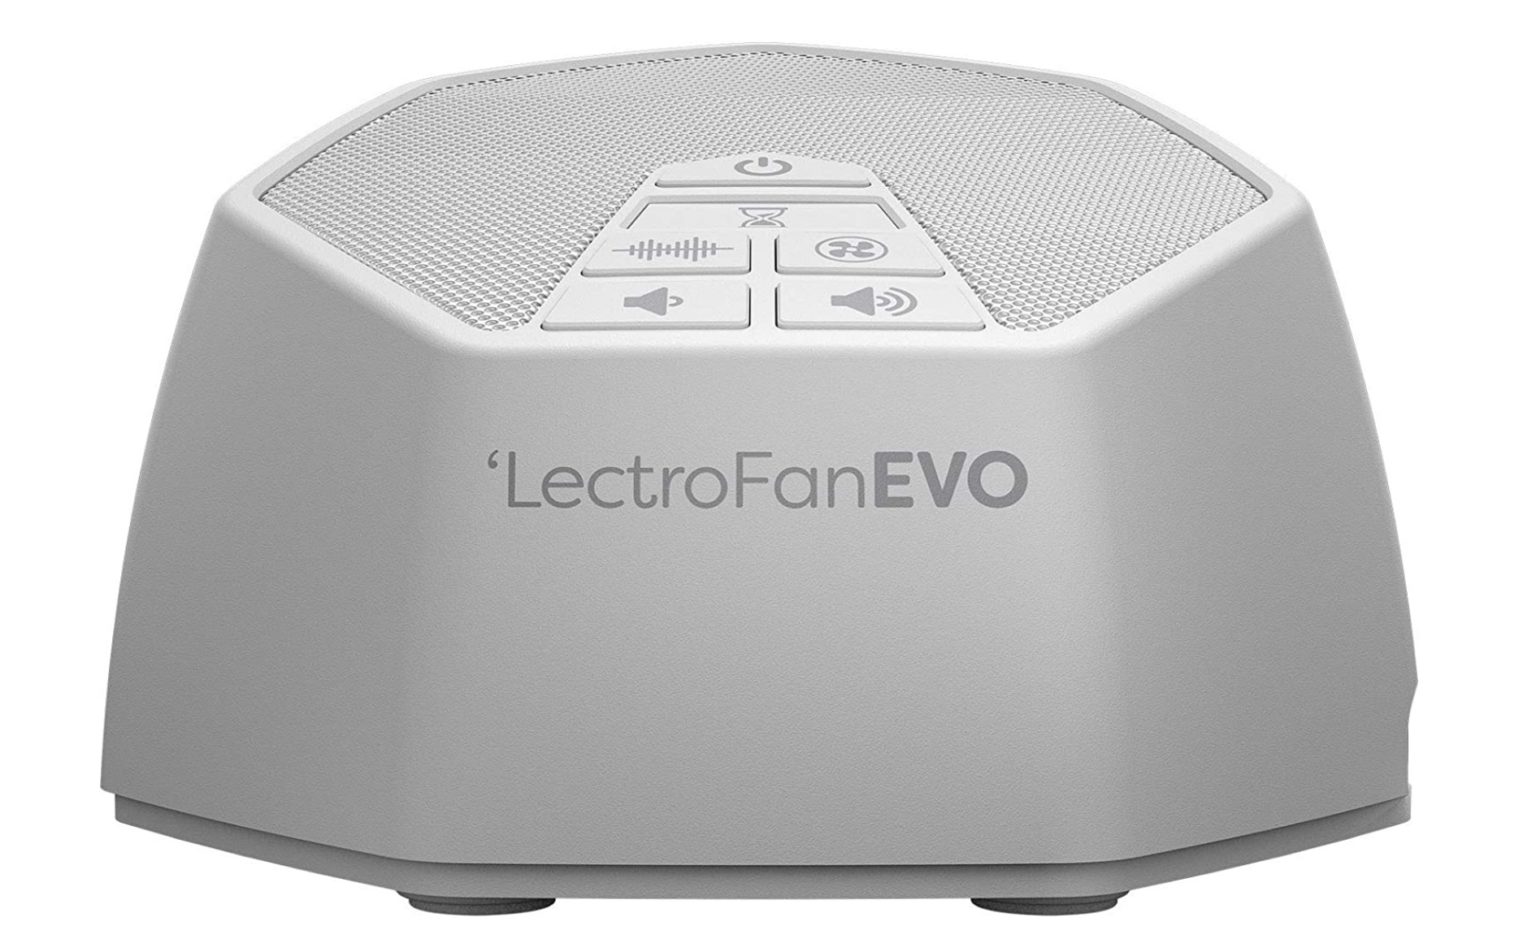 Amazon.com photo of the LectroFan Evo White Noise Machine